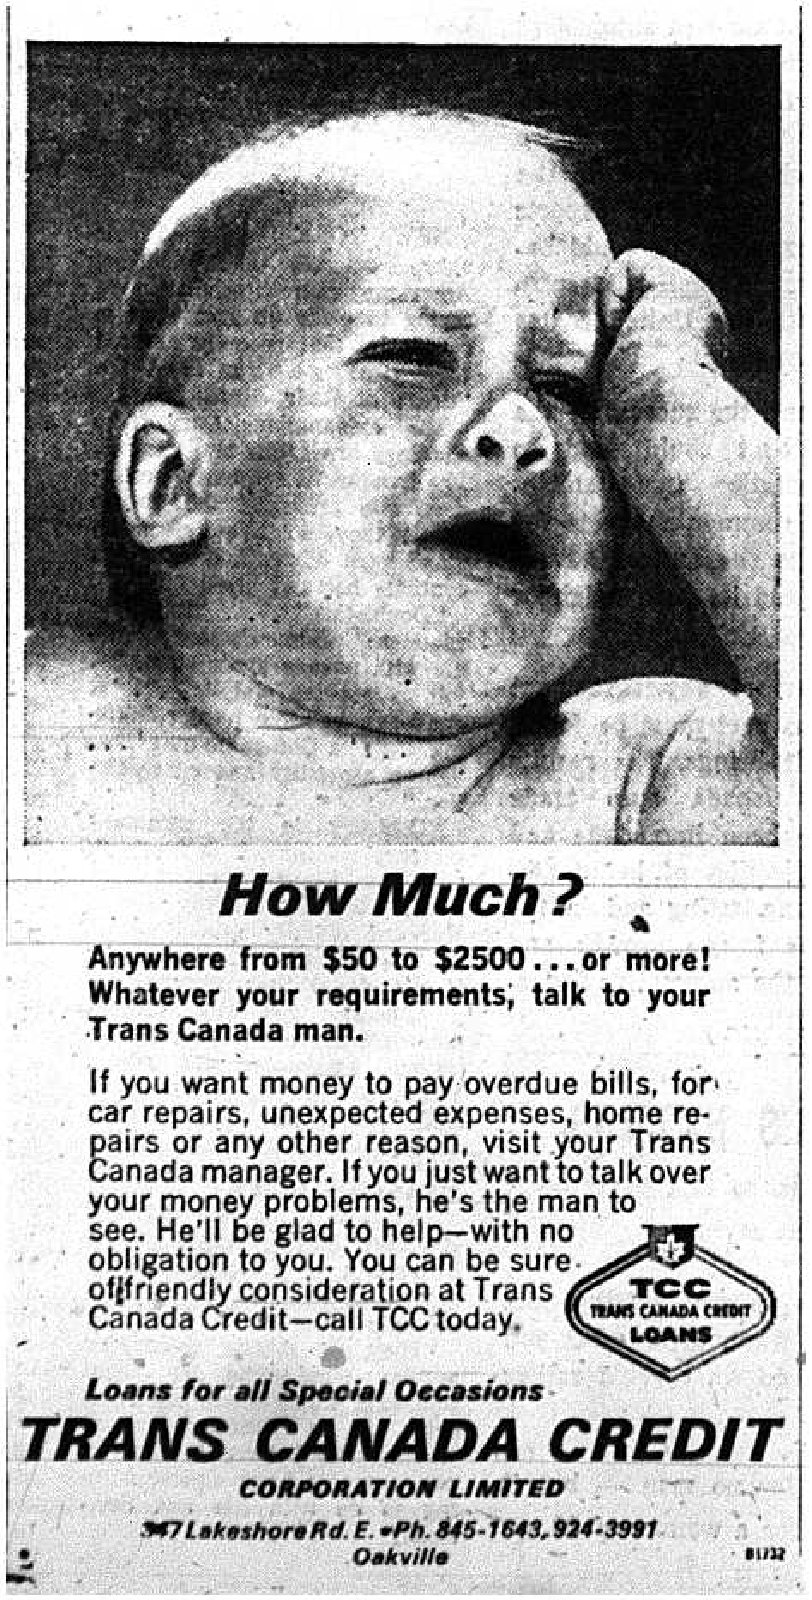 Trans Canada Credit Advertisement, 1966